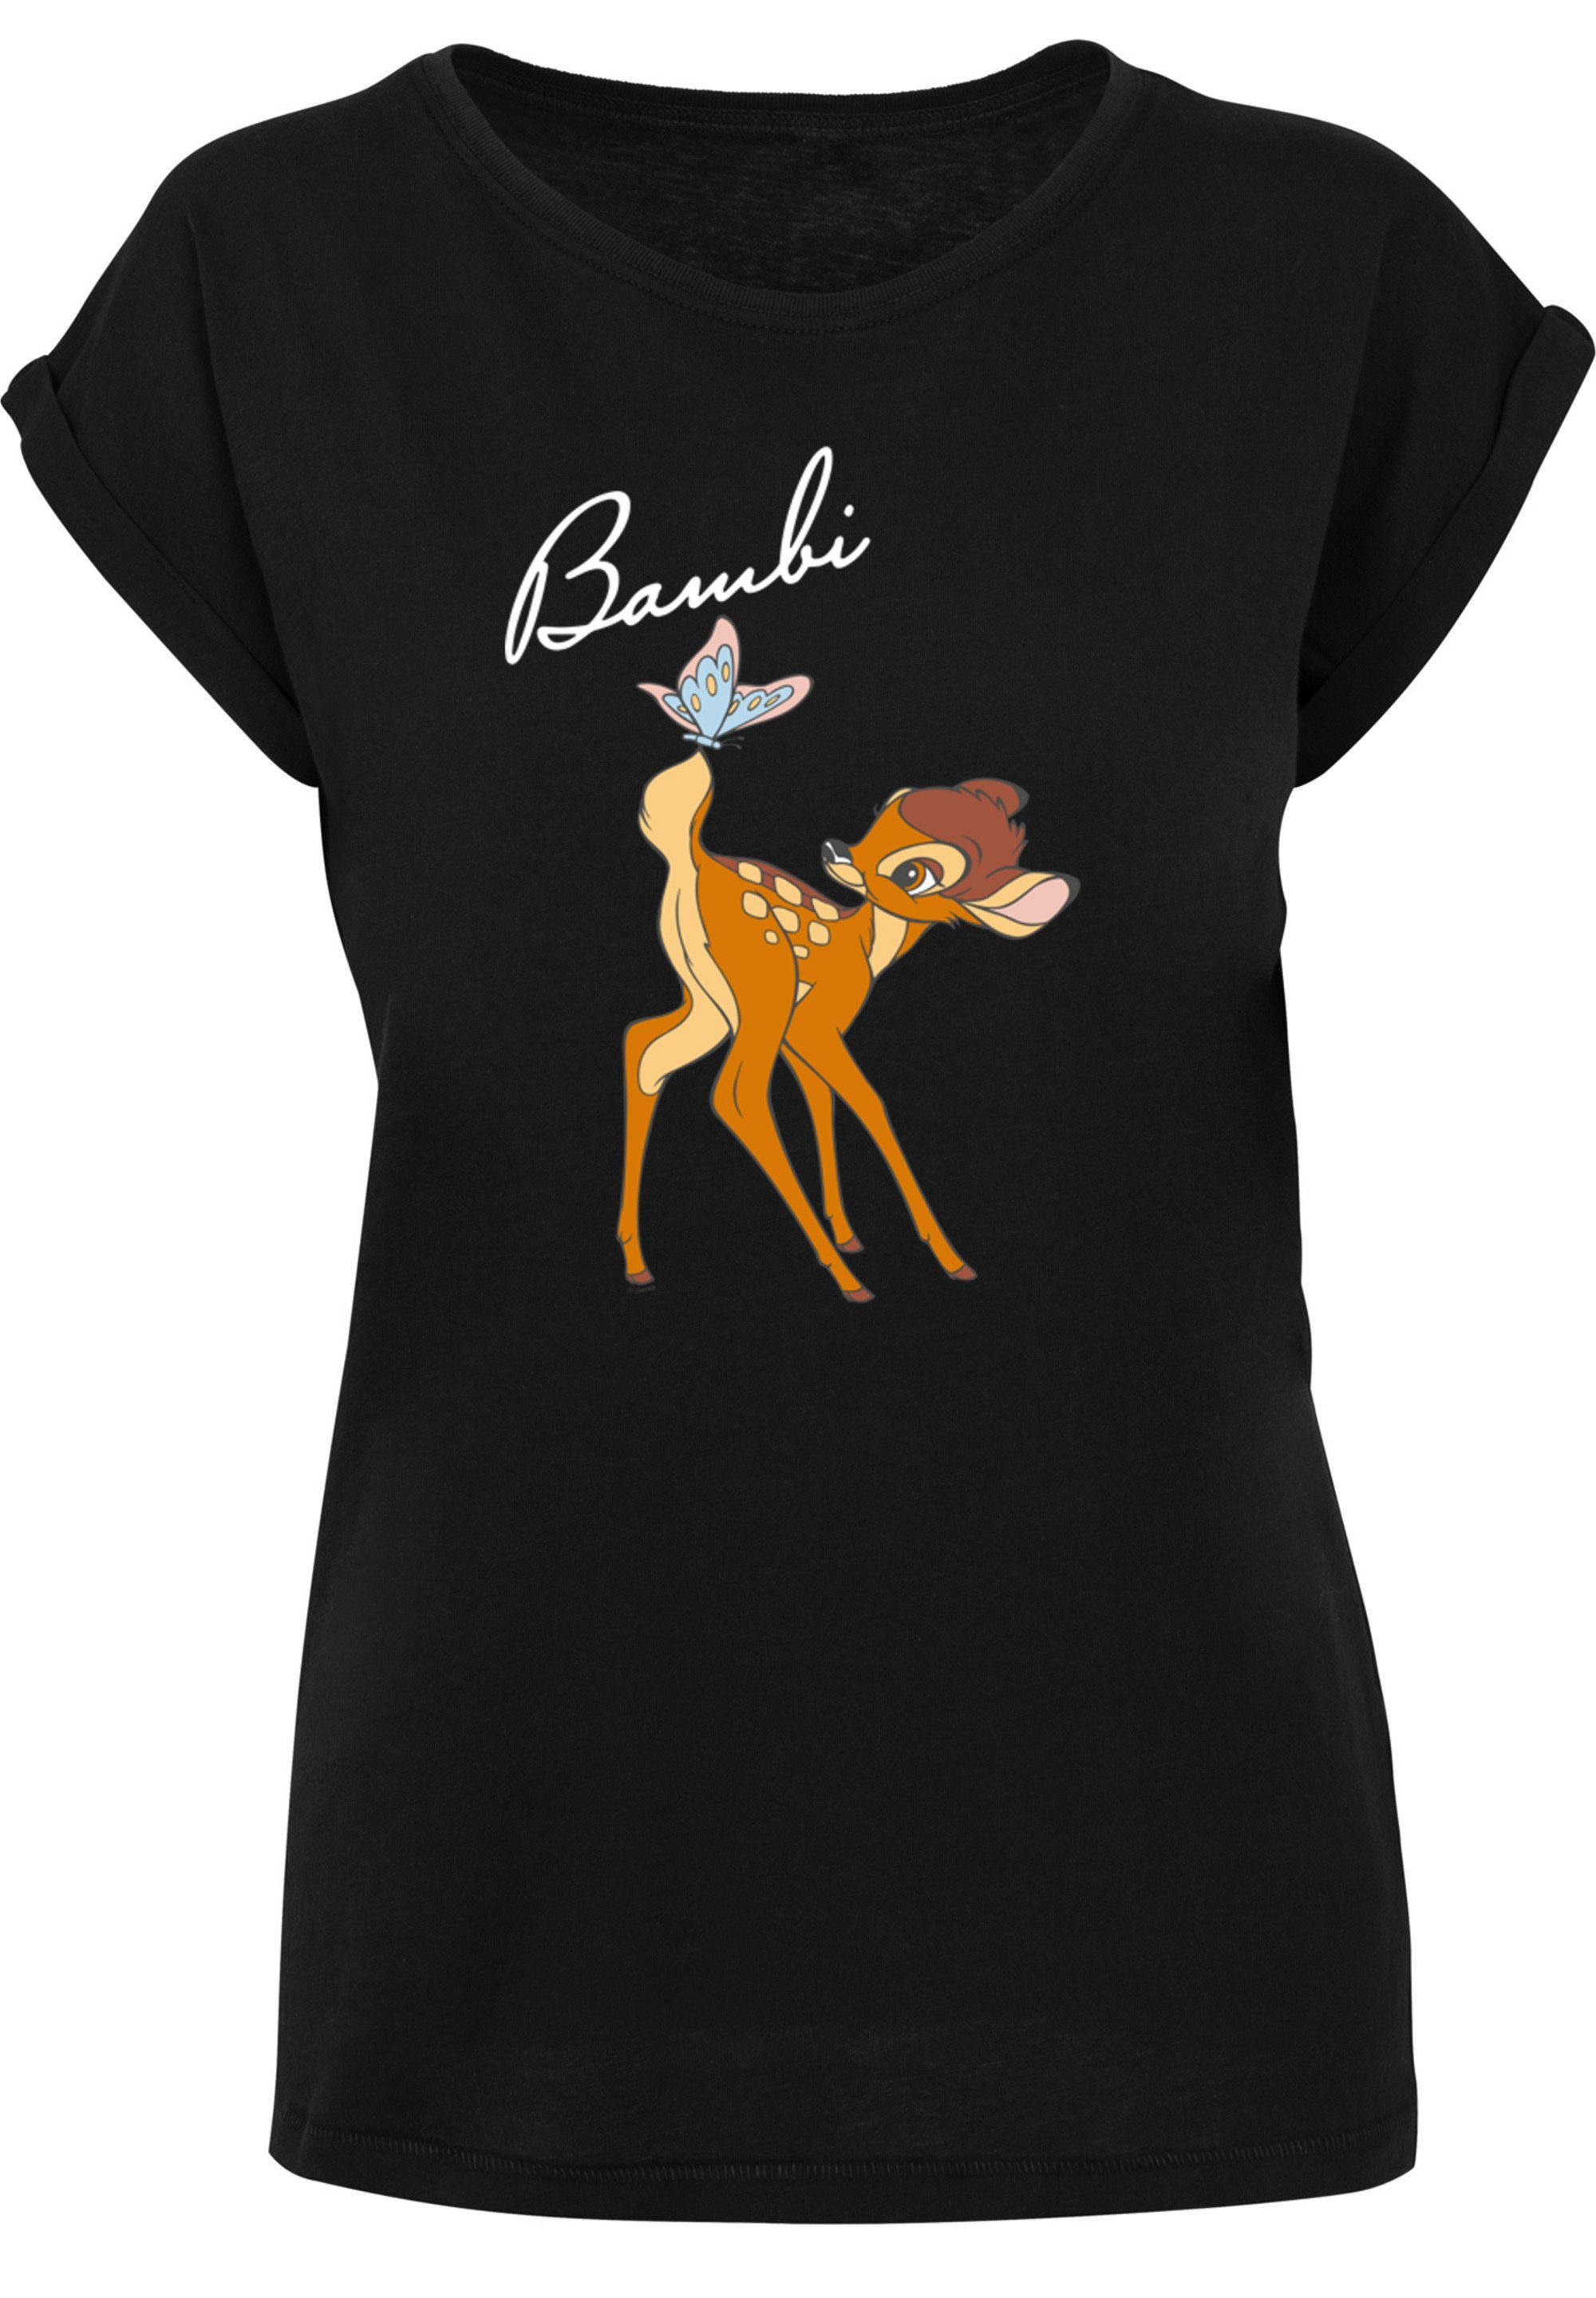 Tail Print T-Shirt Schmetterling F4NT4STIC schwarz Bambi Disney